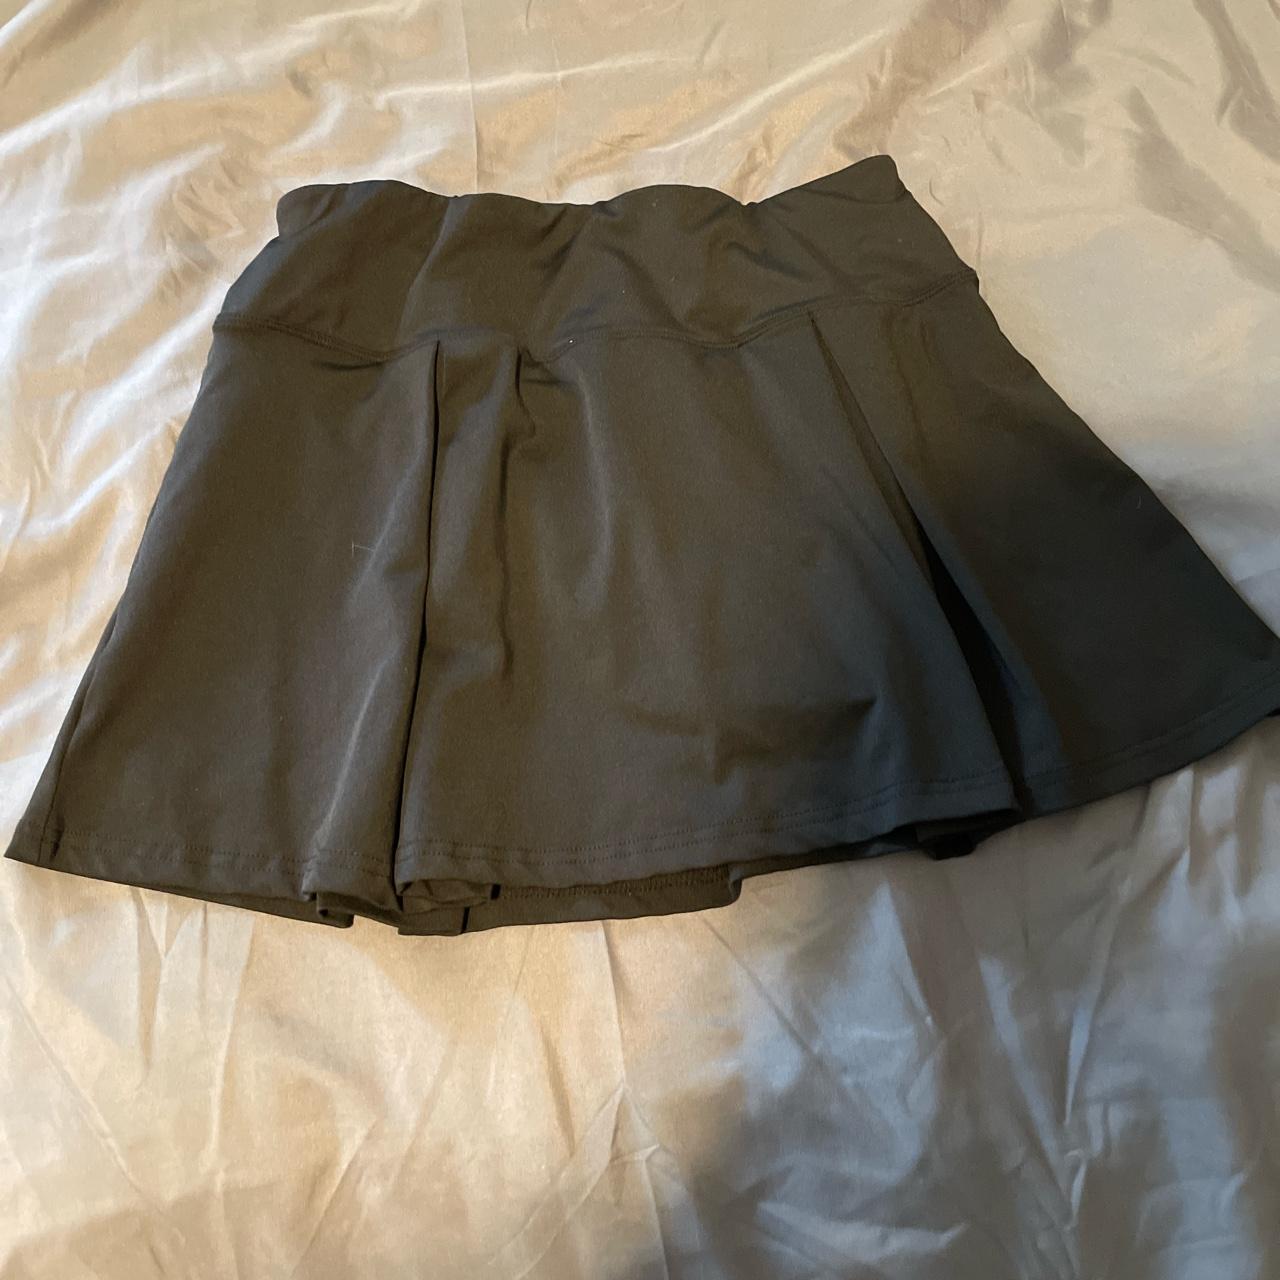 Black Pleated Tennis Skirt Shorts underneath Has... - Depop